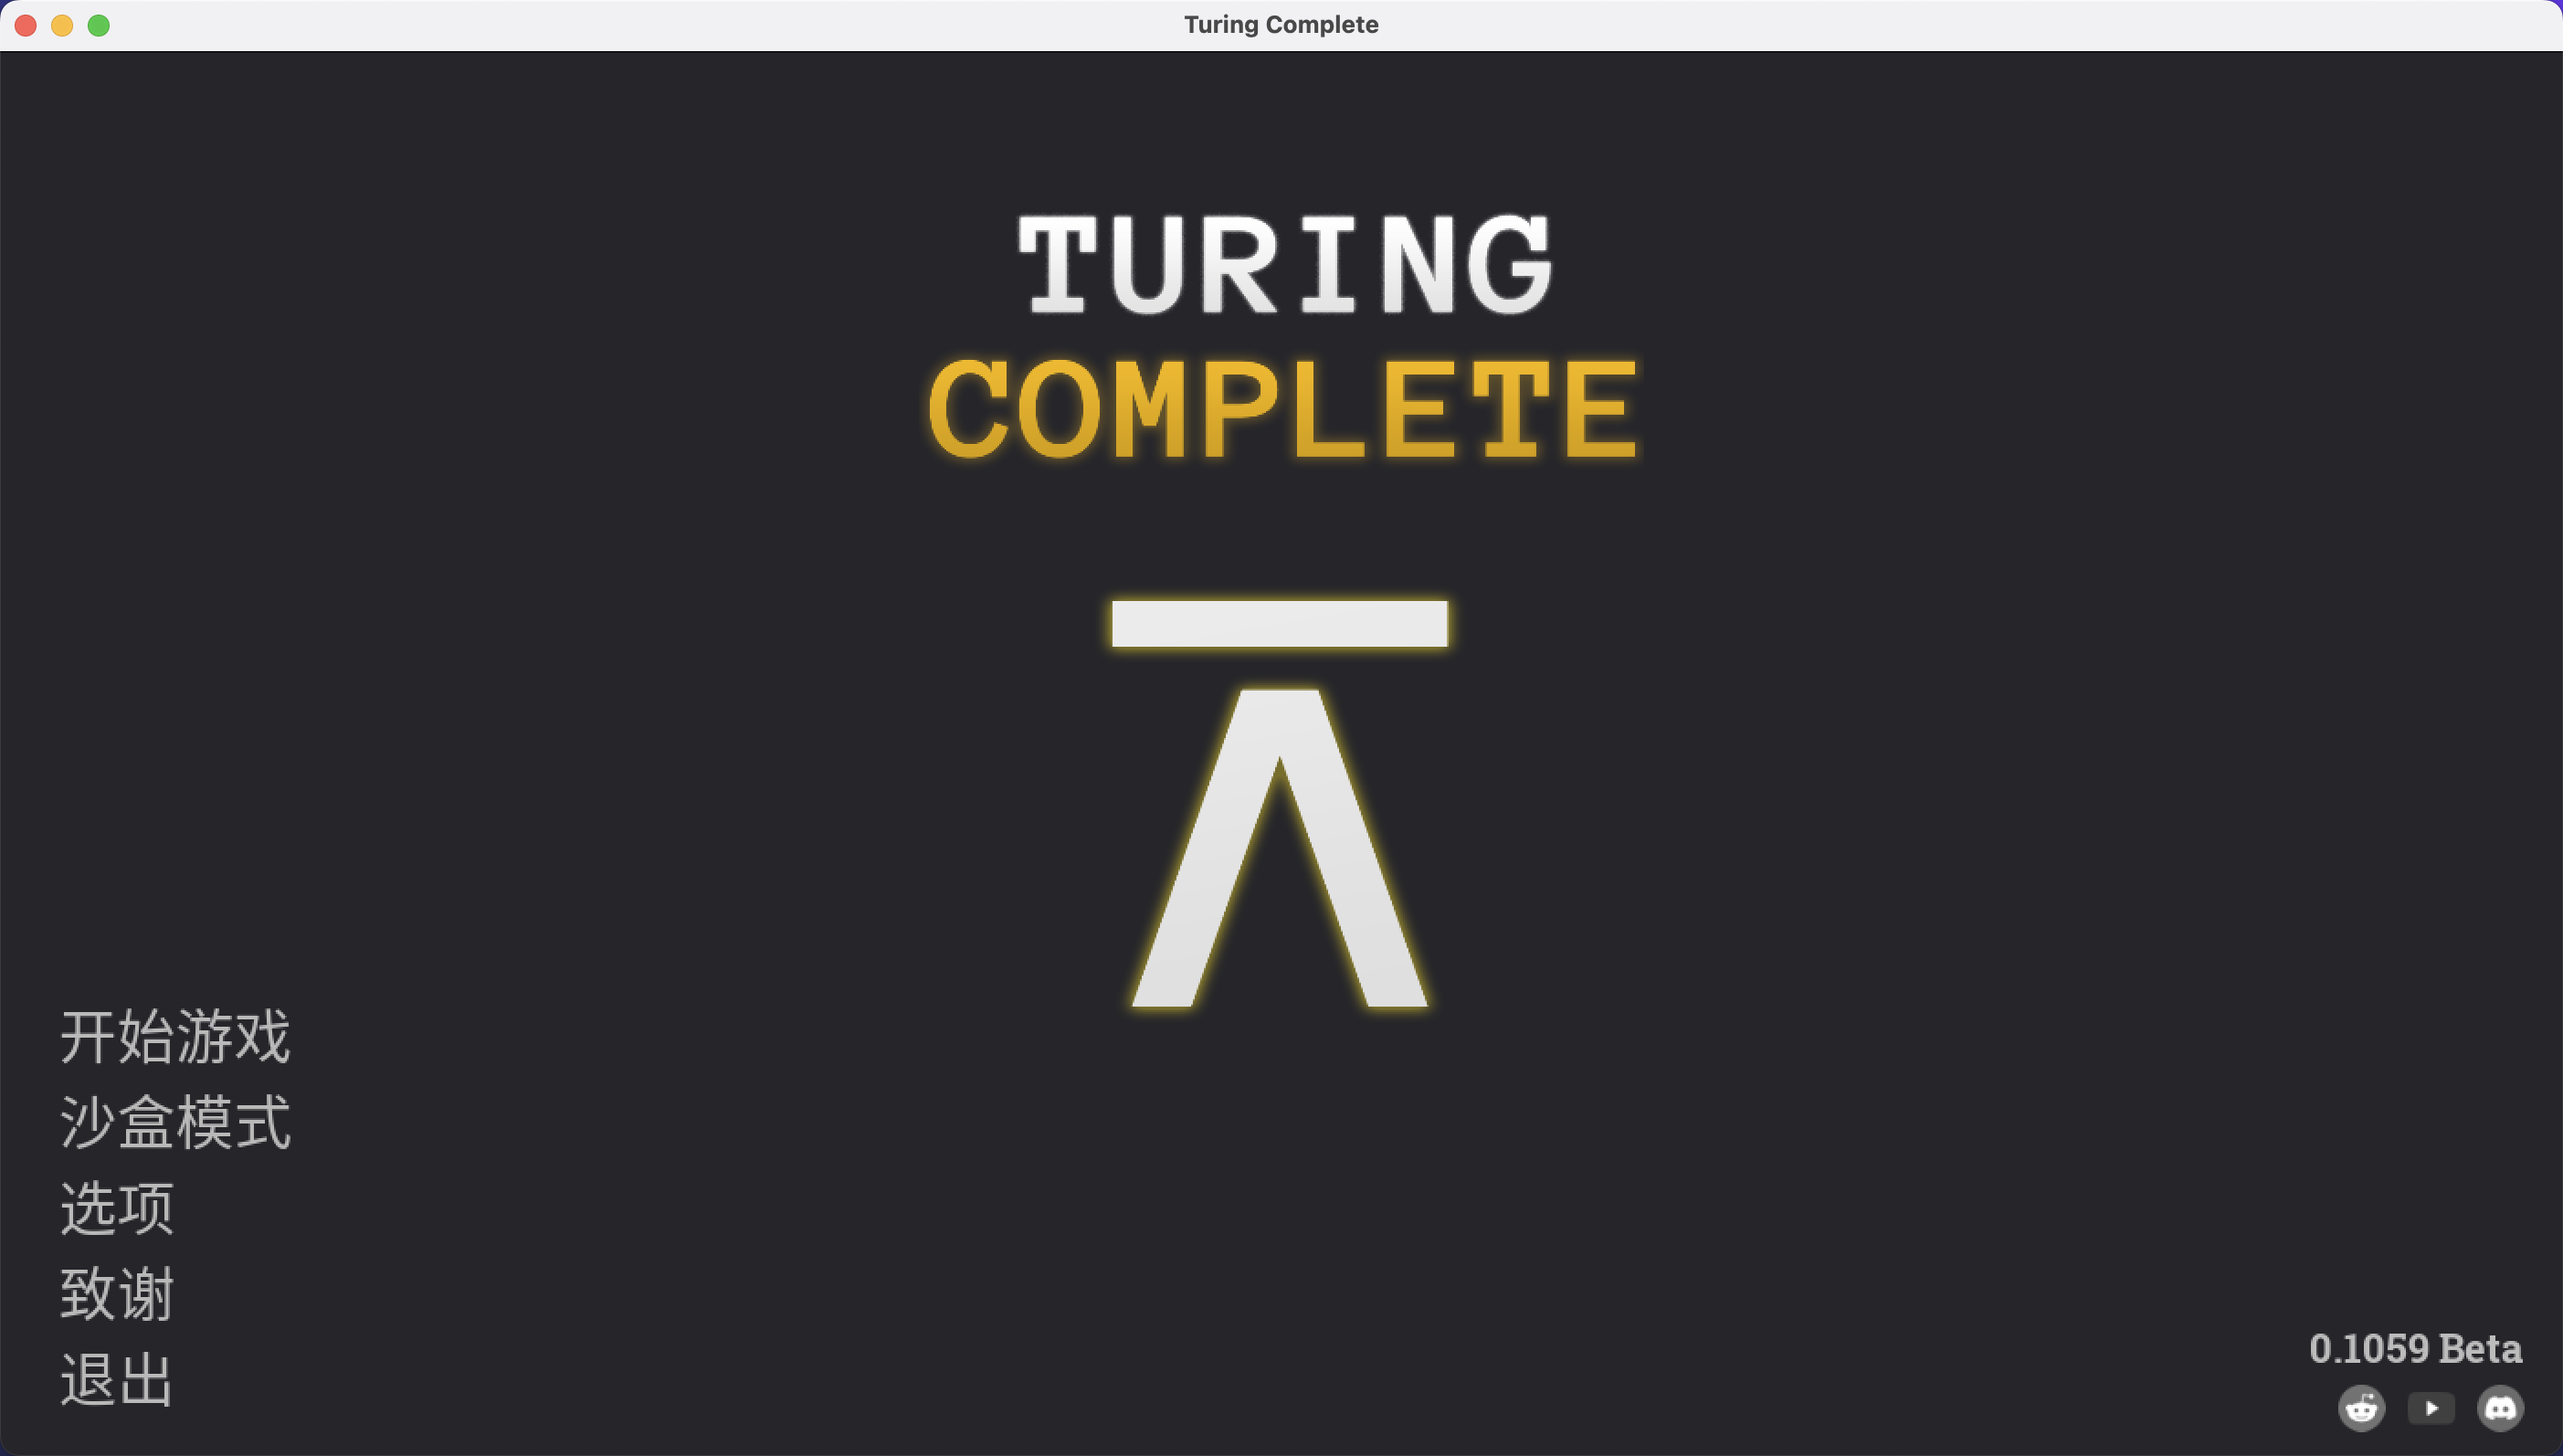 图灵完备 for Mac v0.1059 Turing Complete 中文移植版 苹果电脑